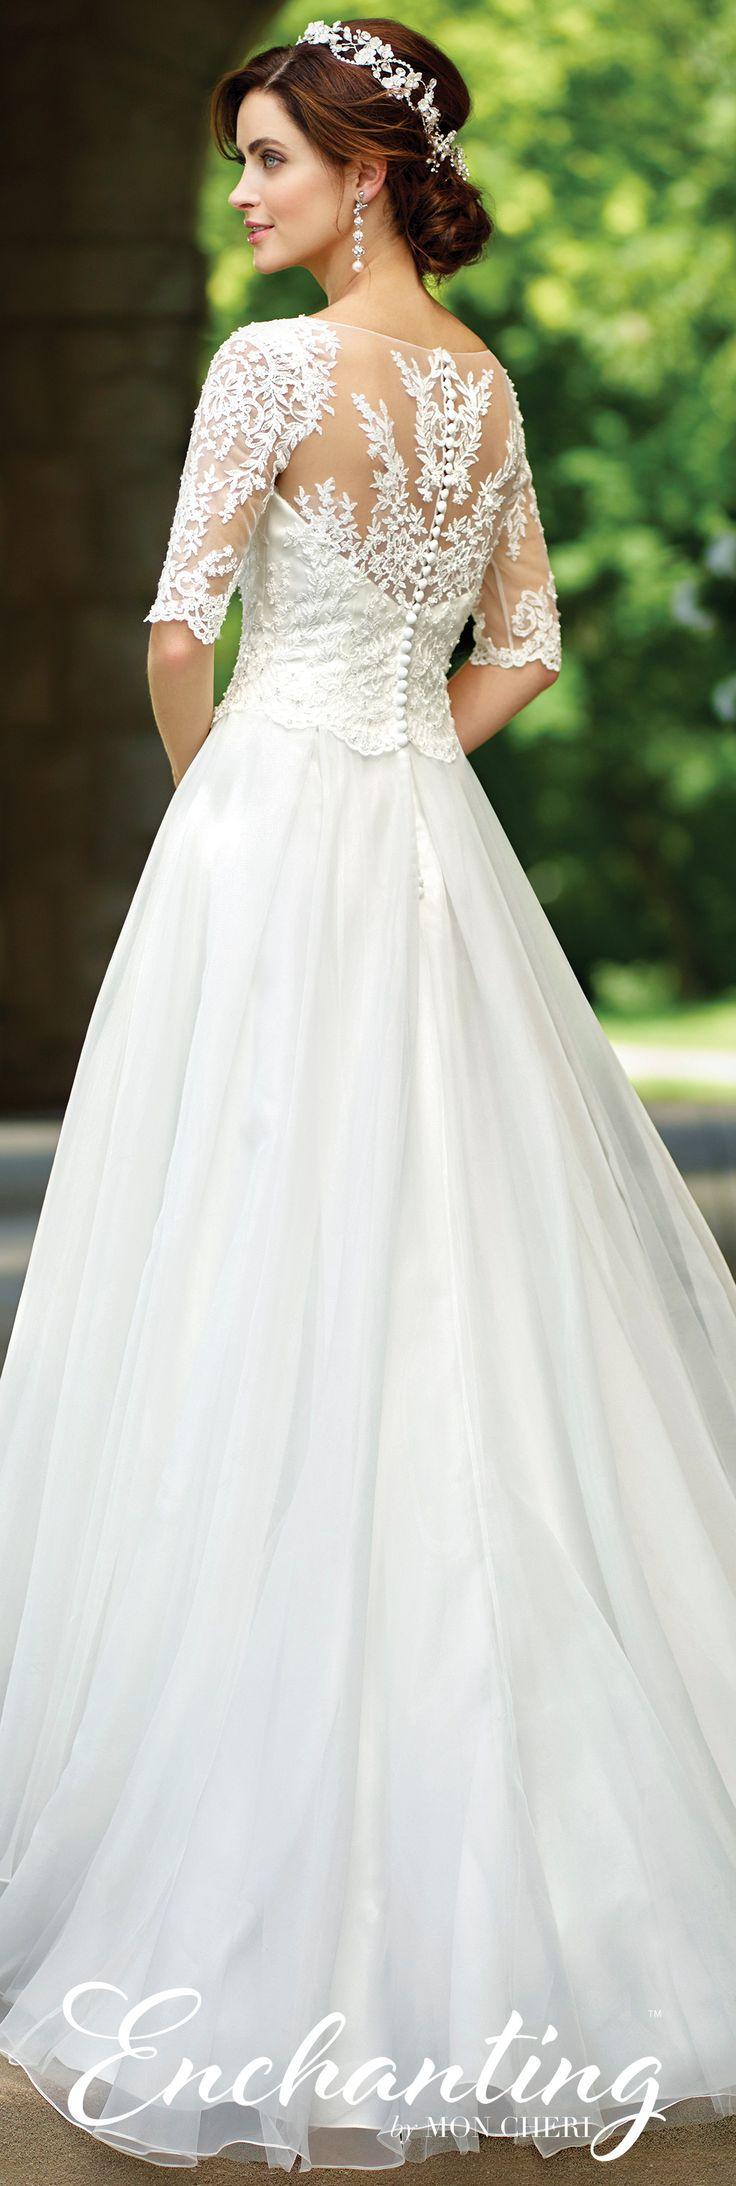 زفاف - Organza A-Line Wedding Dress- 117177- Enchanting By Mon Cheri